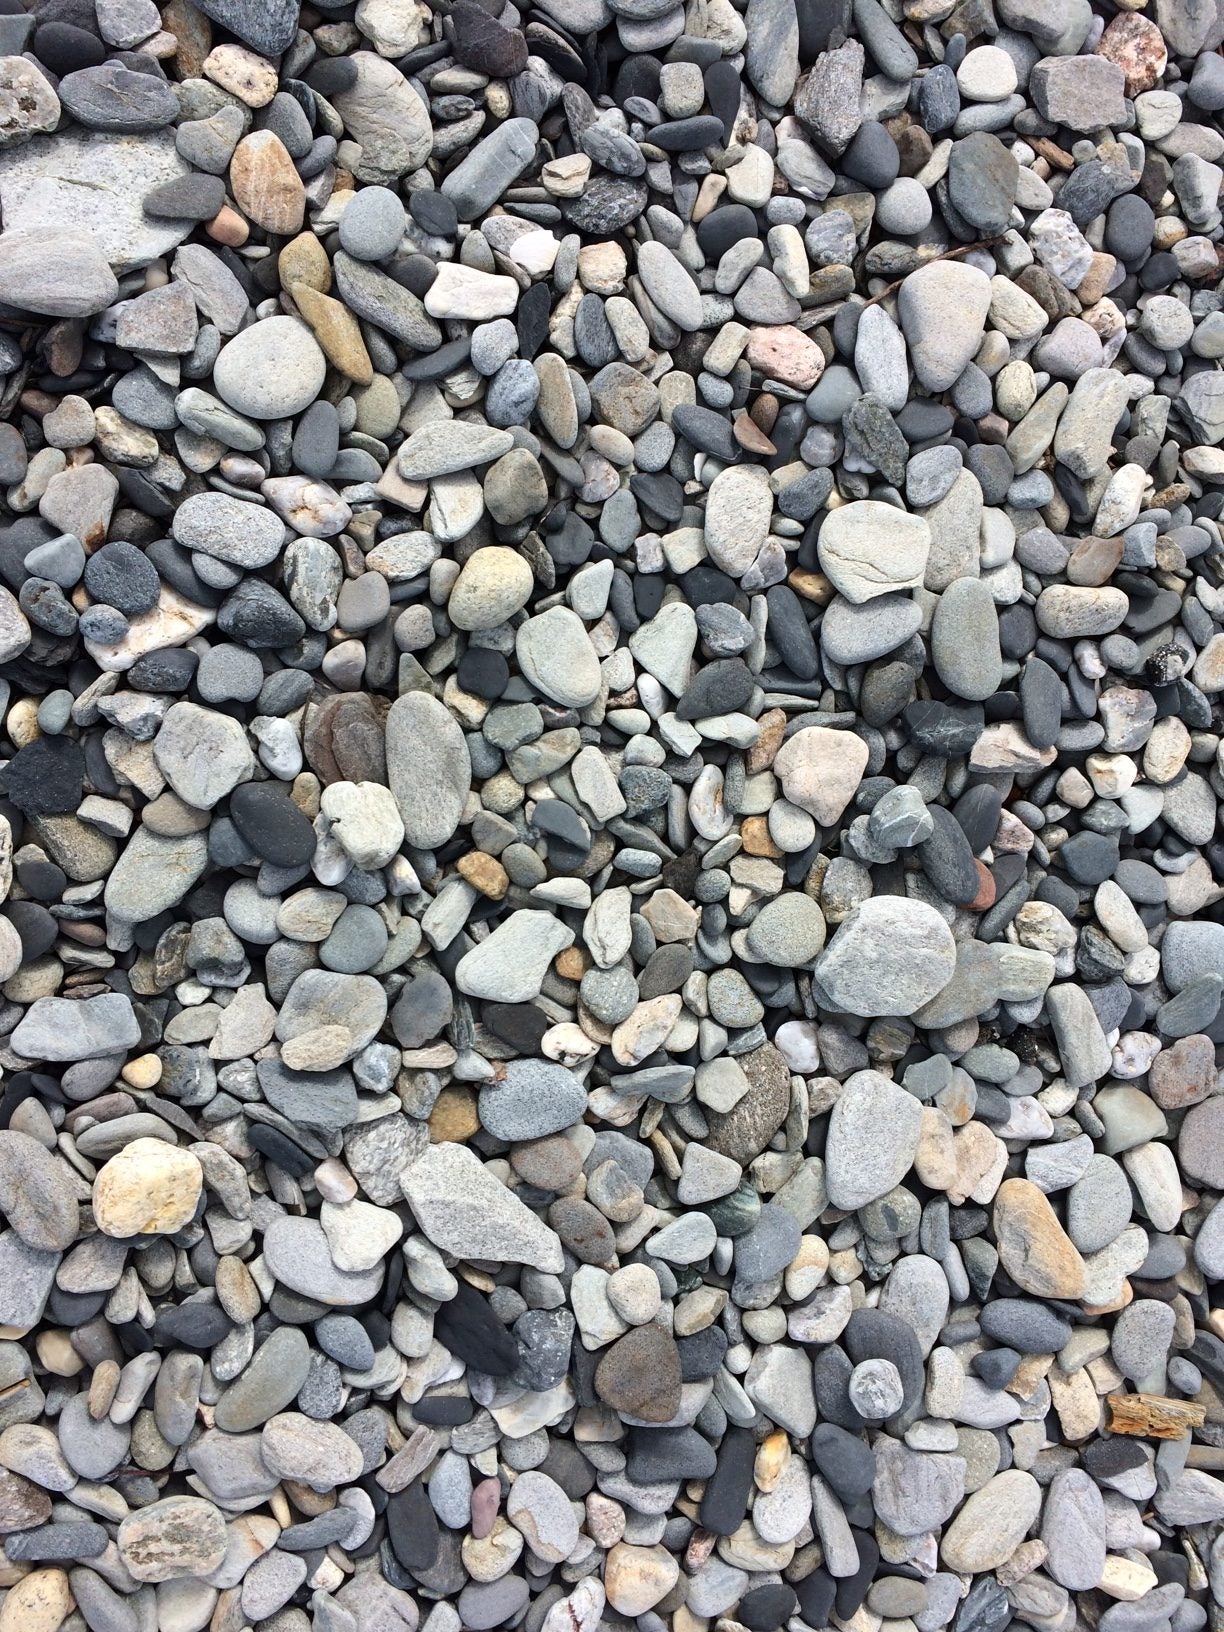 Closeup of beach pebbles.